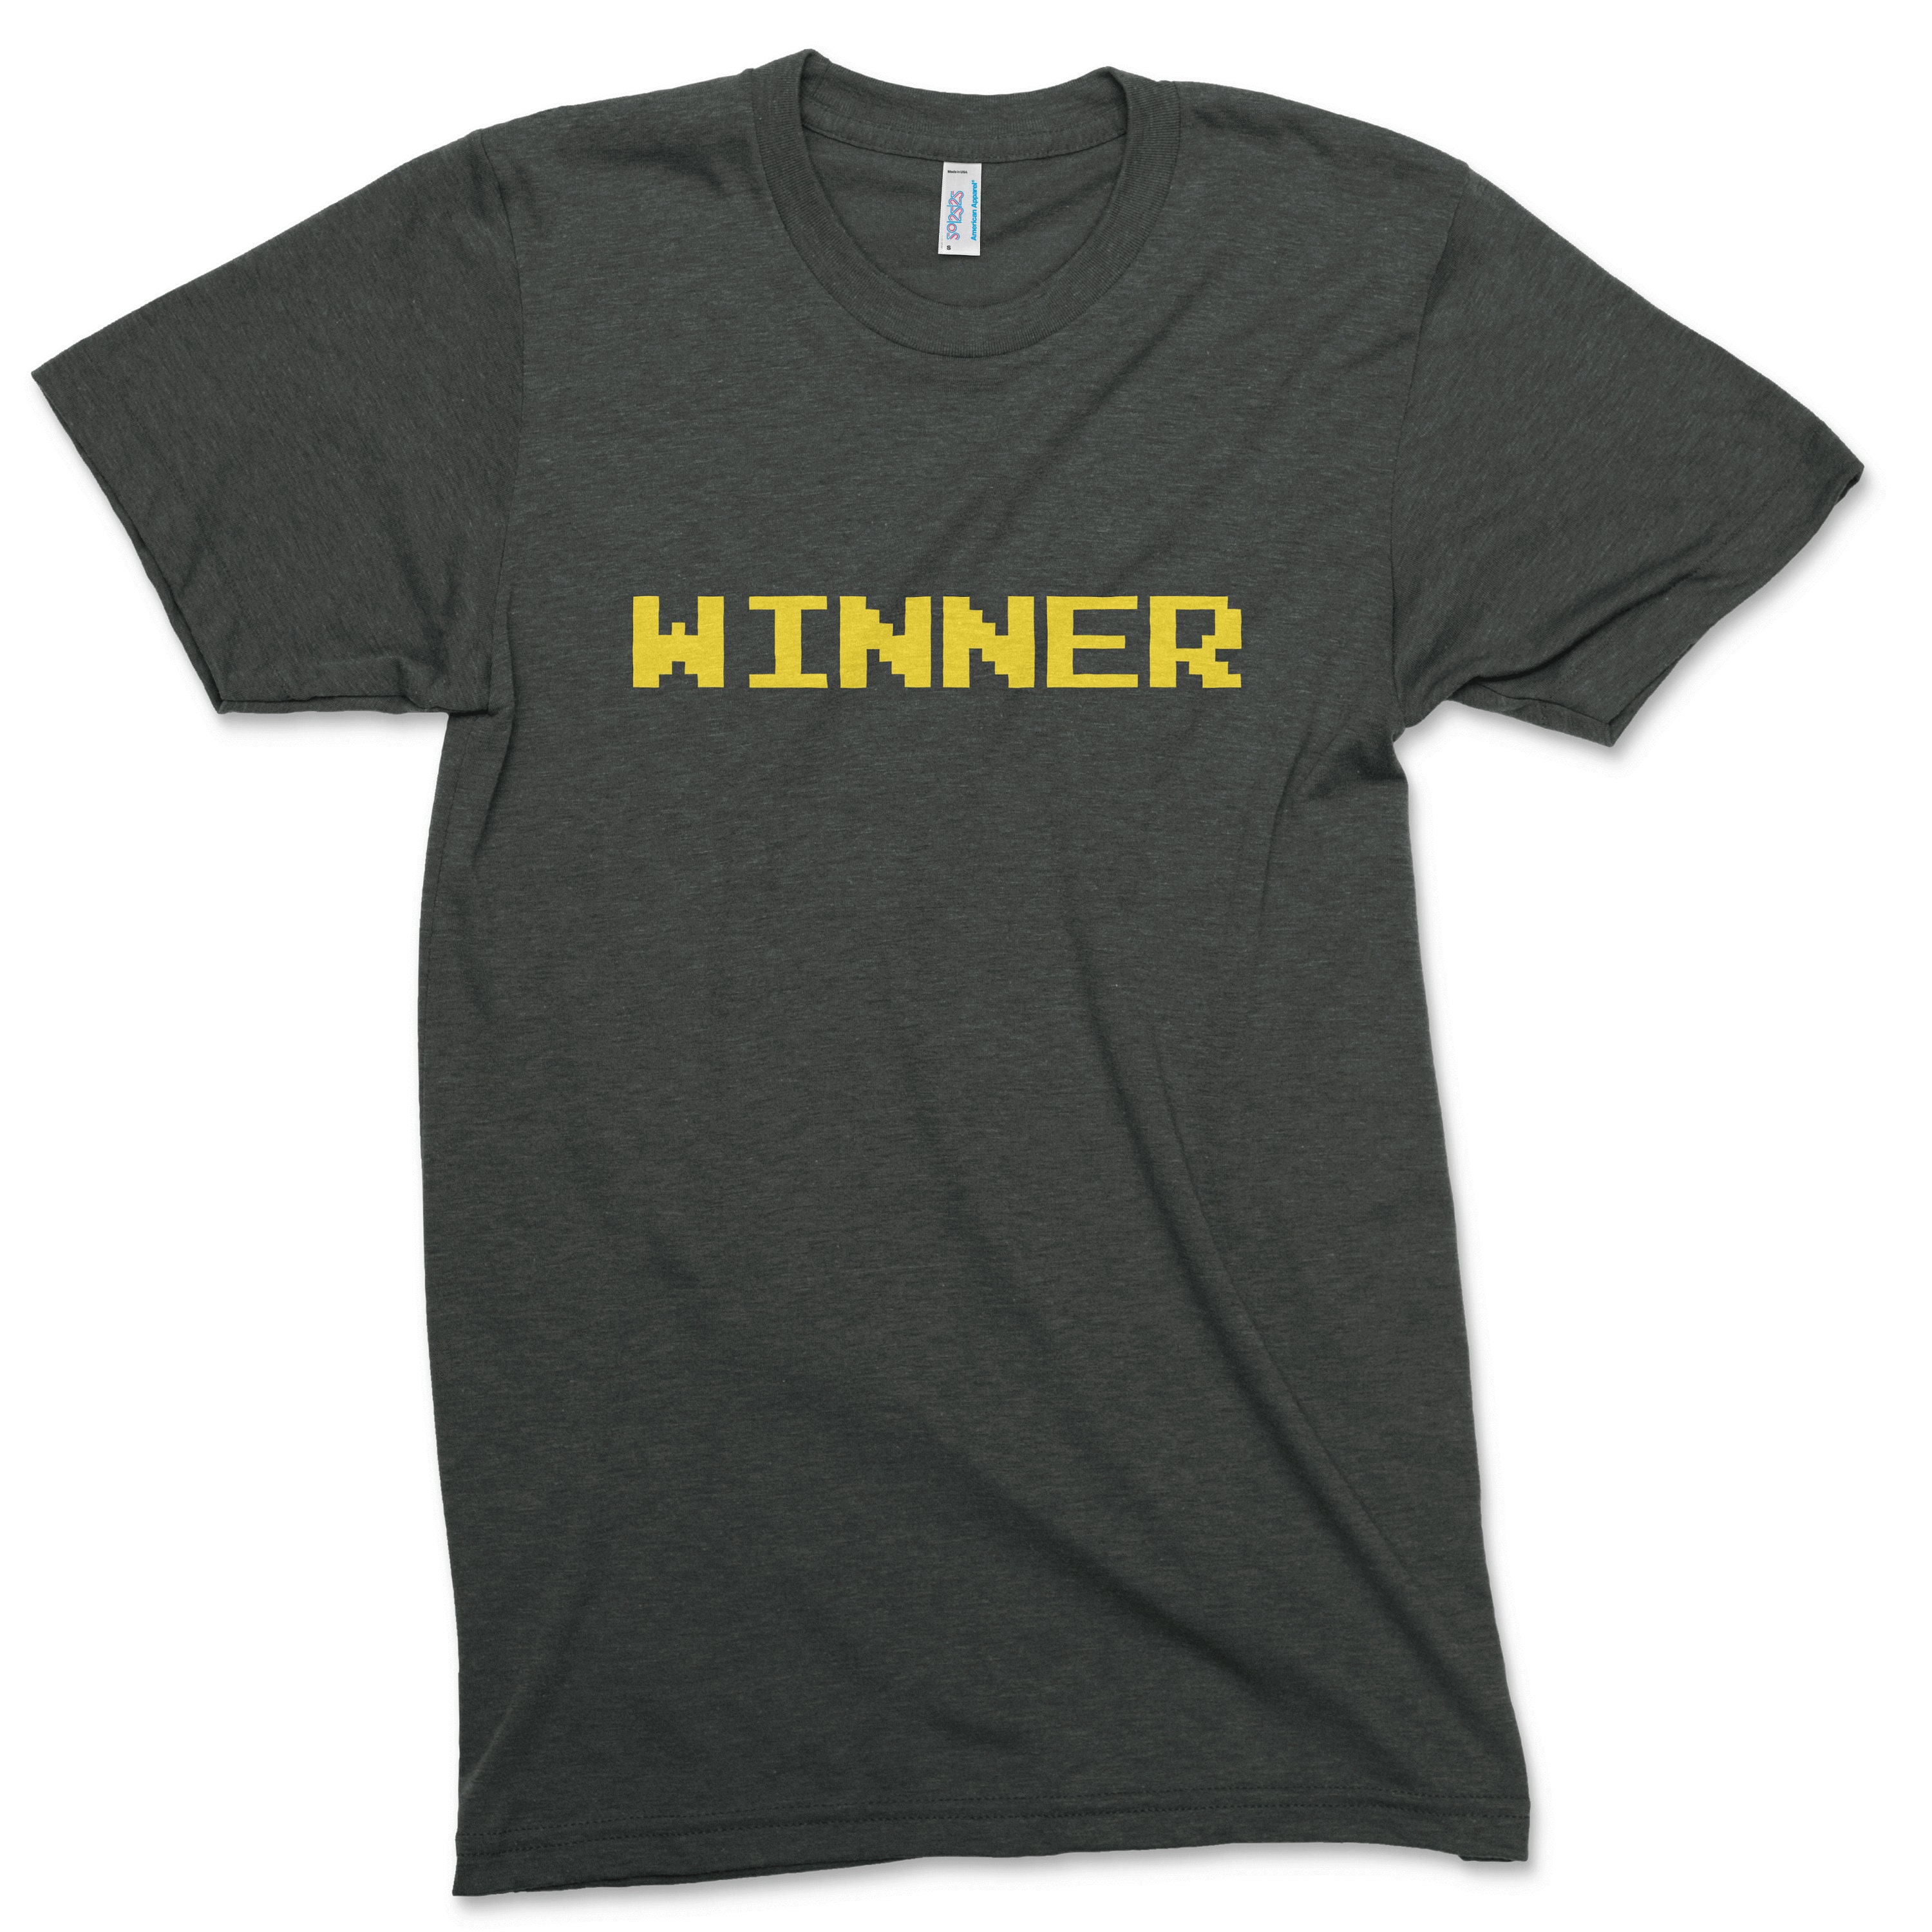 Winner Shirt - American Apparel Tri-Blend Track T-Shirt 8 Bit Game Winner, Over, Retro Gaming Console Font, 8-Bit Video